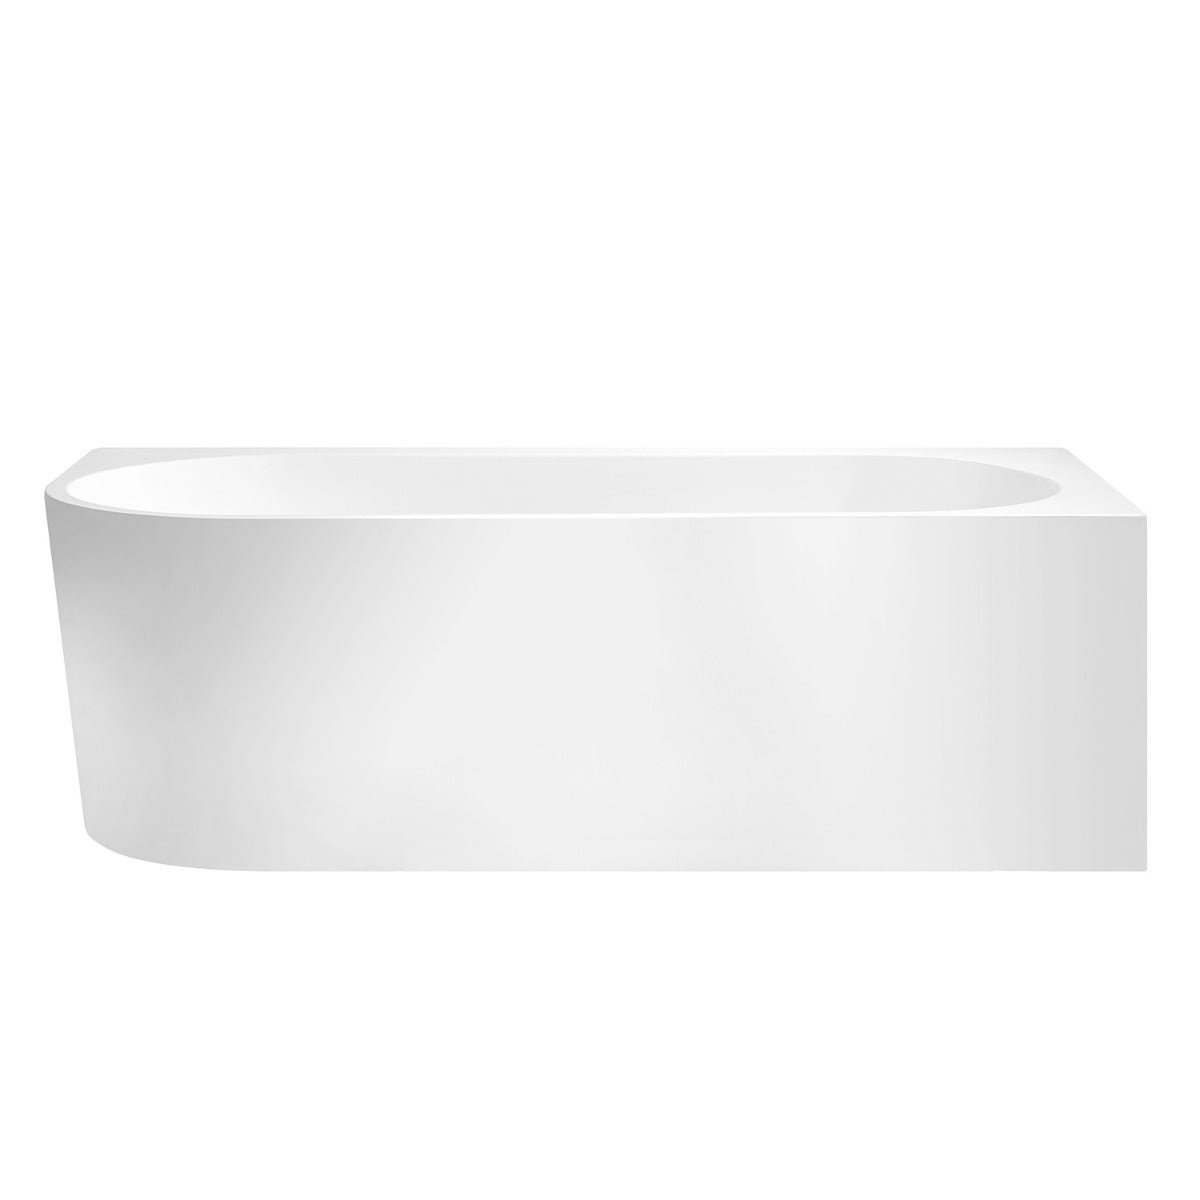 JassferryJASSFERRY 1800x820 mm Freestanding Acrylic Corner Bathtub Soaking SPA (Right Hand Bath)Bathtubs